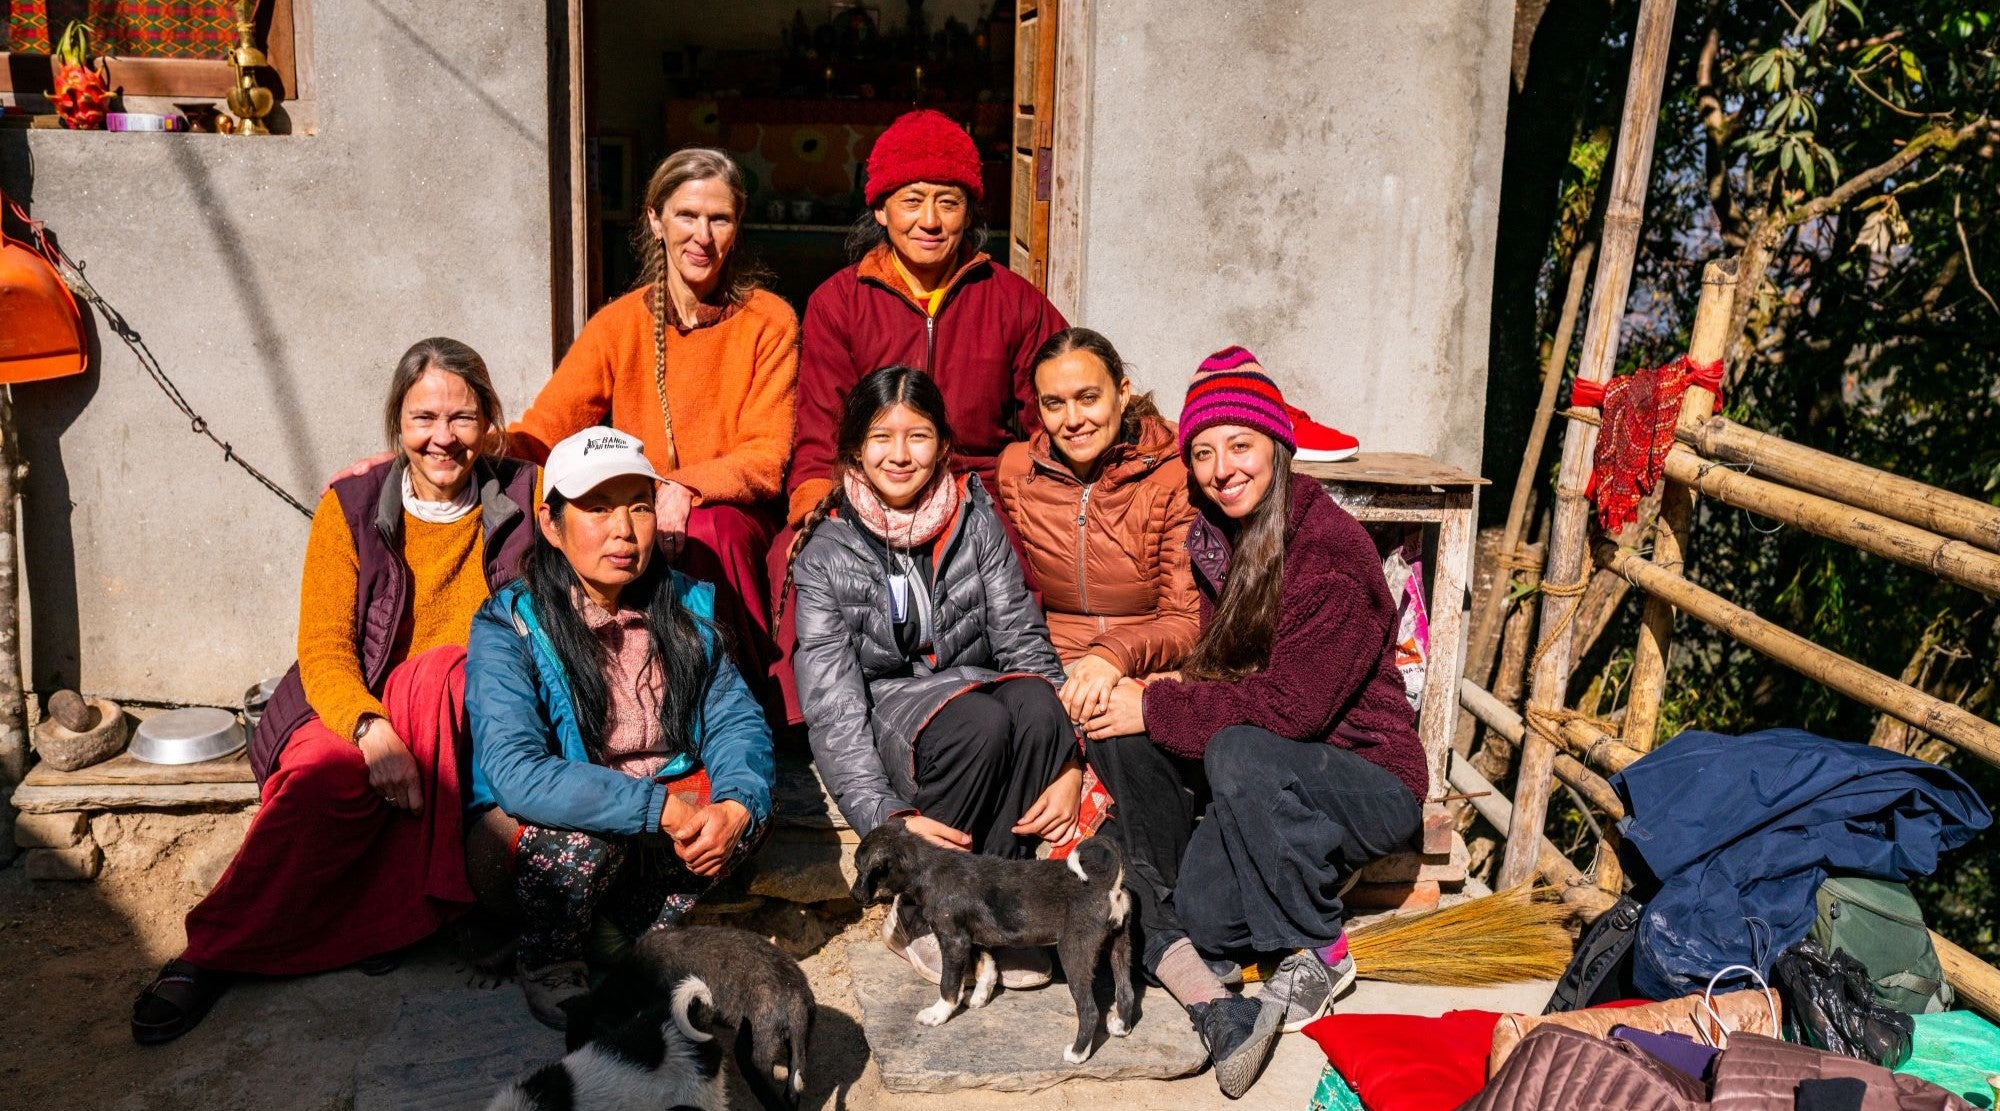 riding elephants, yogis in retreat & entering Nepal